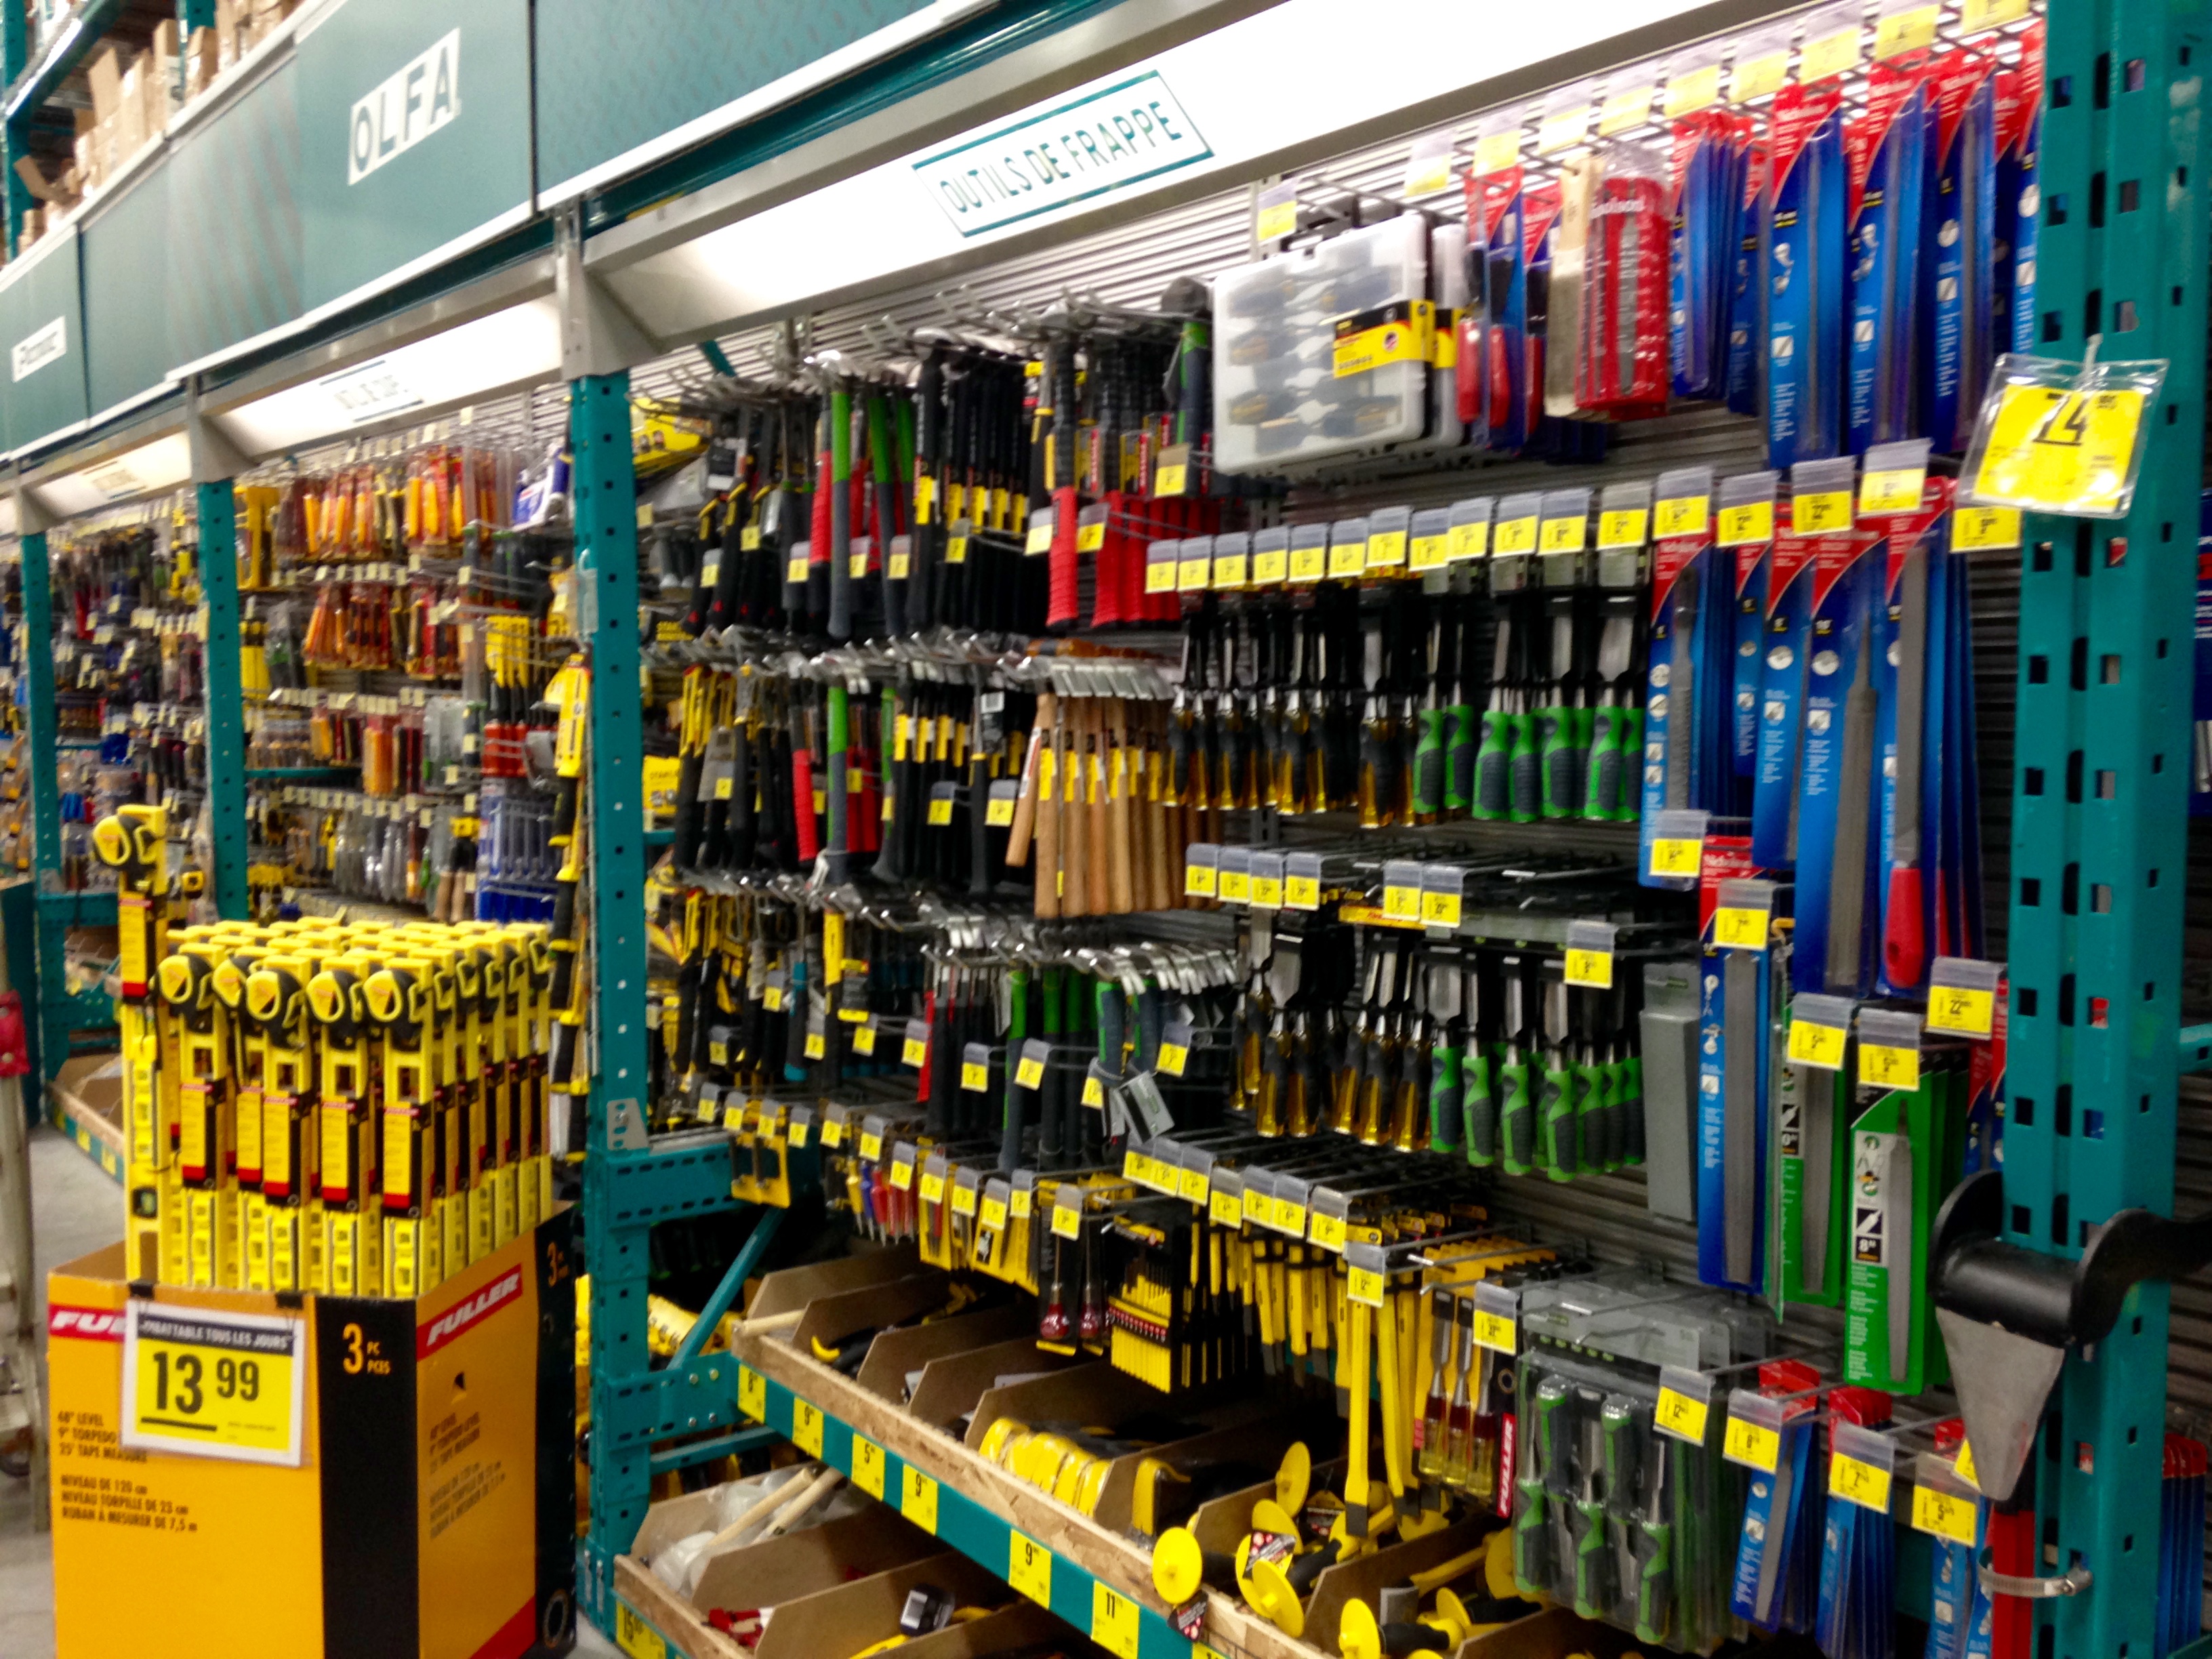 Tool магазин. Магазин: Parts & Tools Store. Hardware Tools Store. Инструмент шоп. Toolshop.